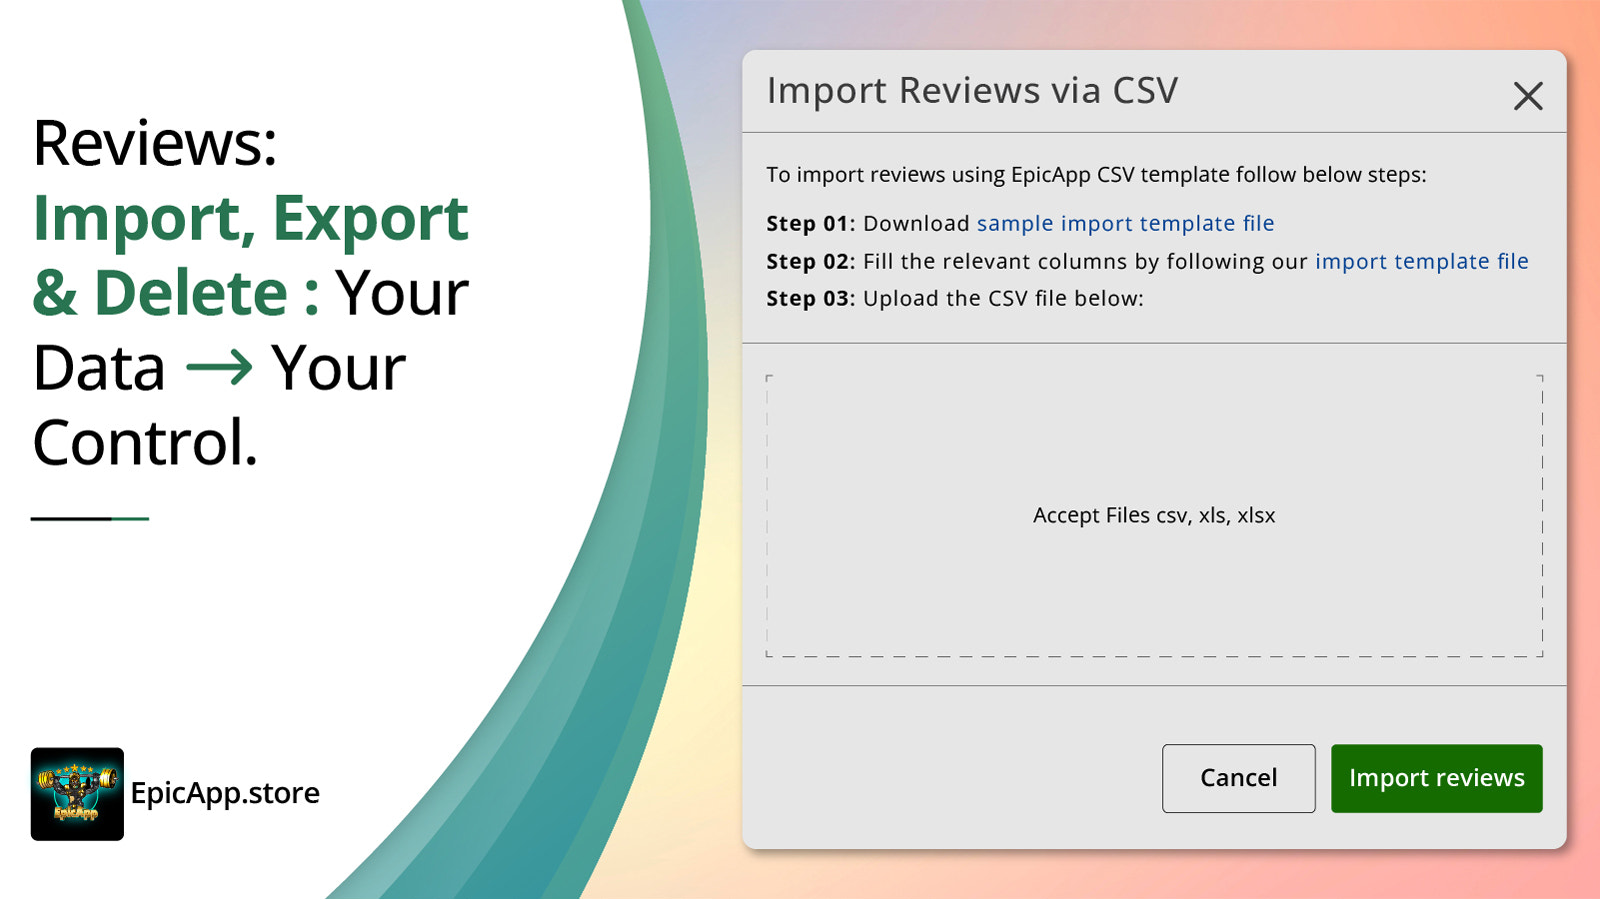 Import, Ecport & Delete Reviews. Your Data, Your control